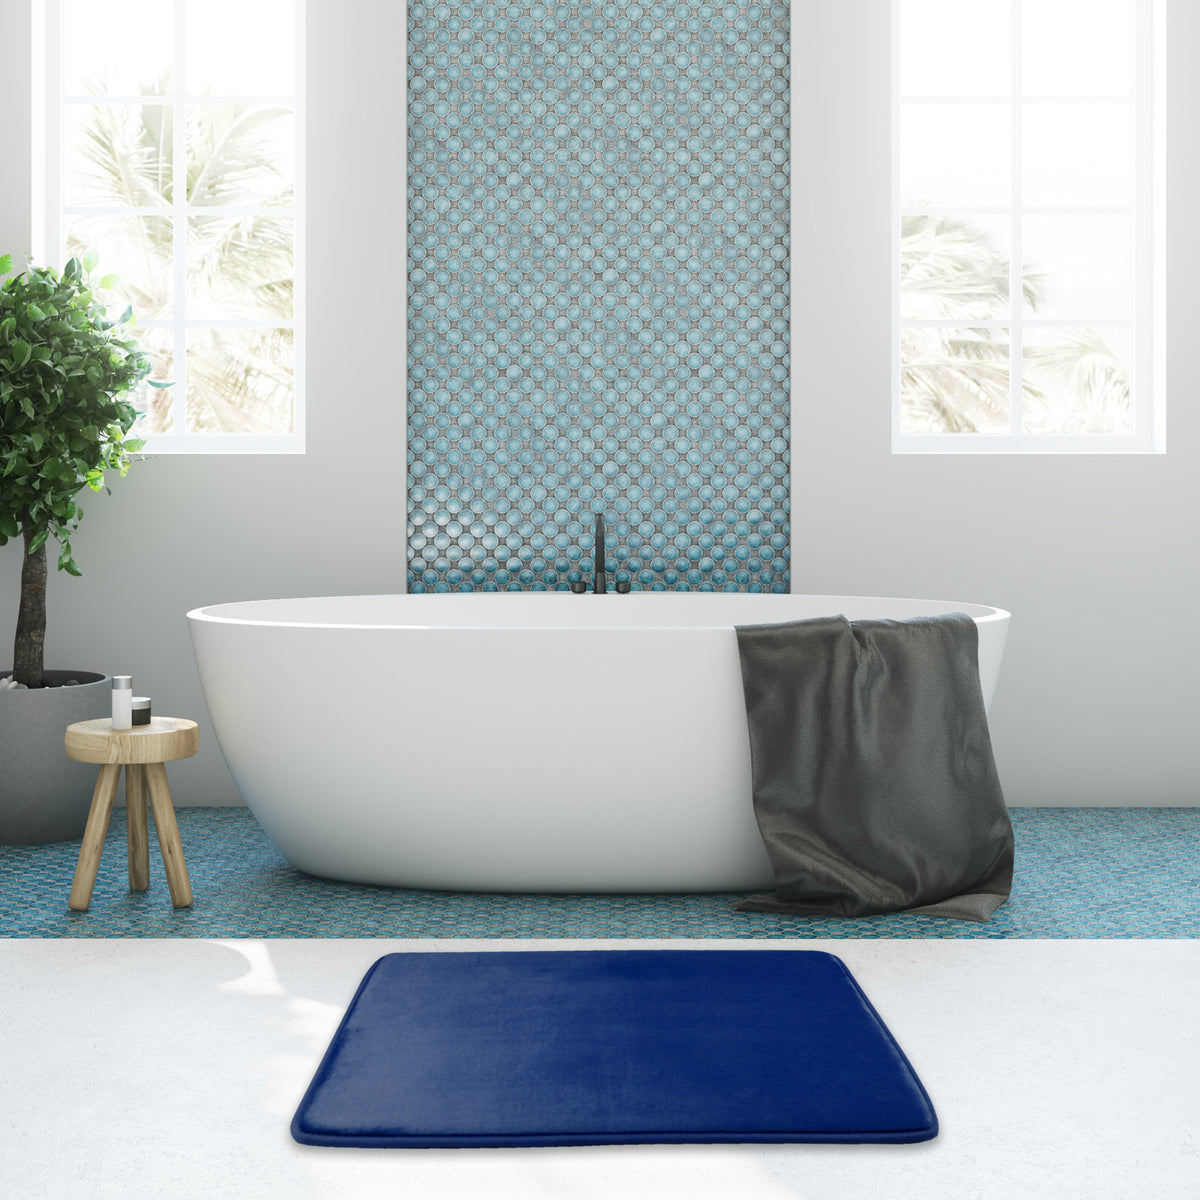 BIGFOOT Memory Foam Bath Mat 17 x 24 for Tub and Shower, Water Absorbe –  BedBathKitchen